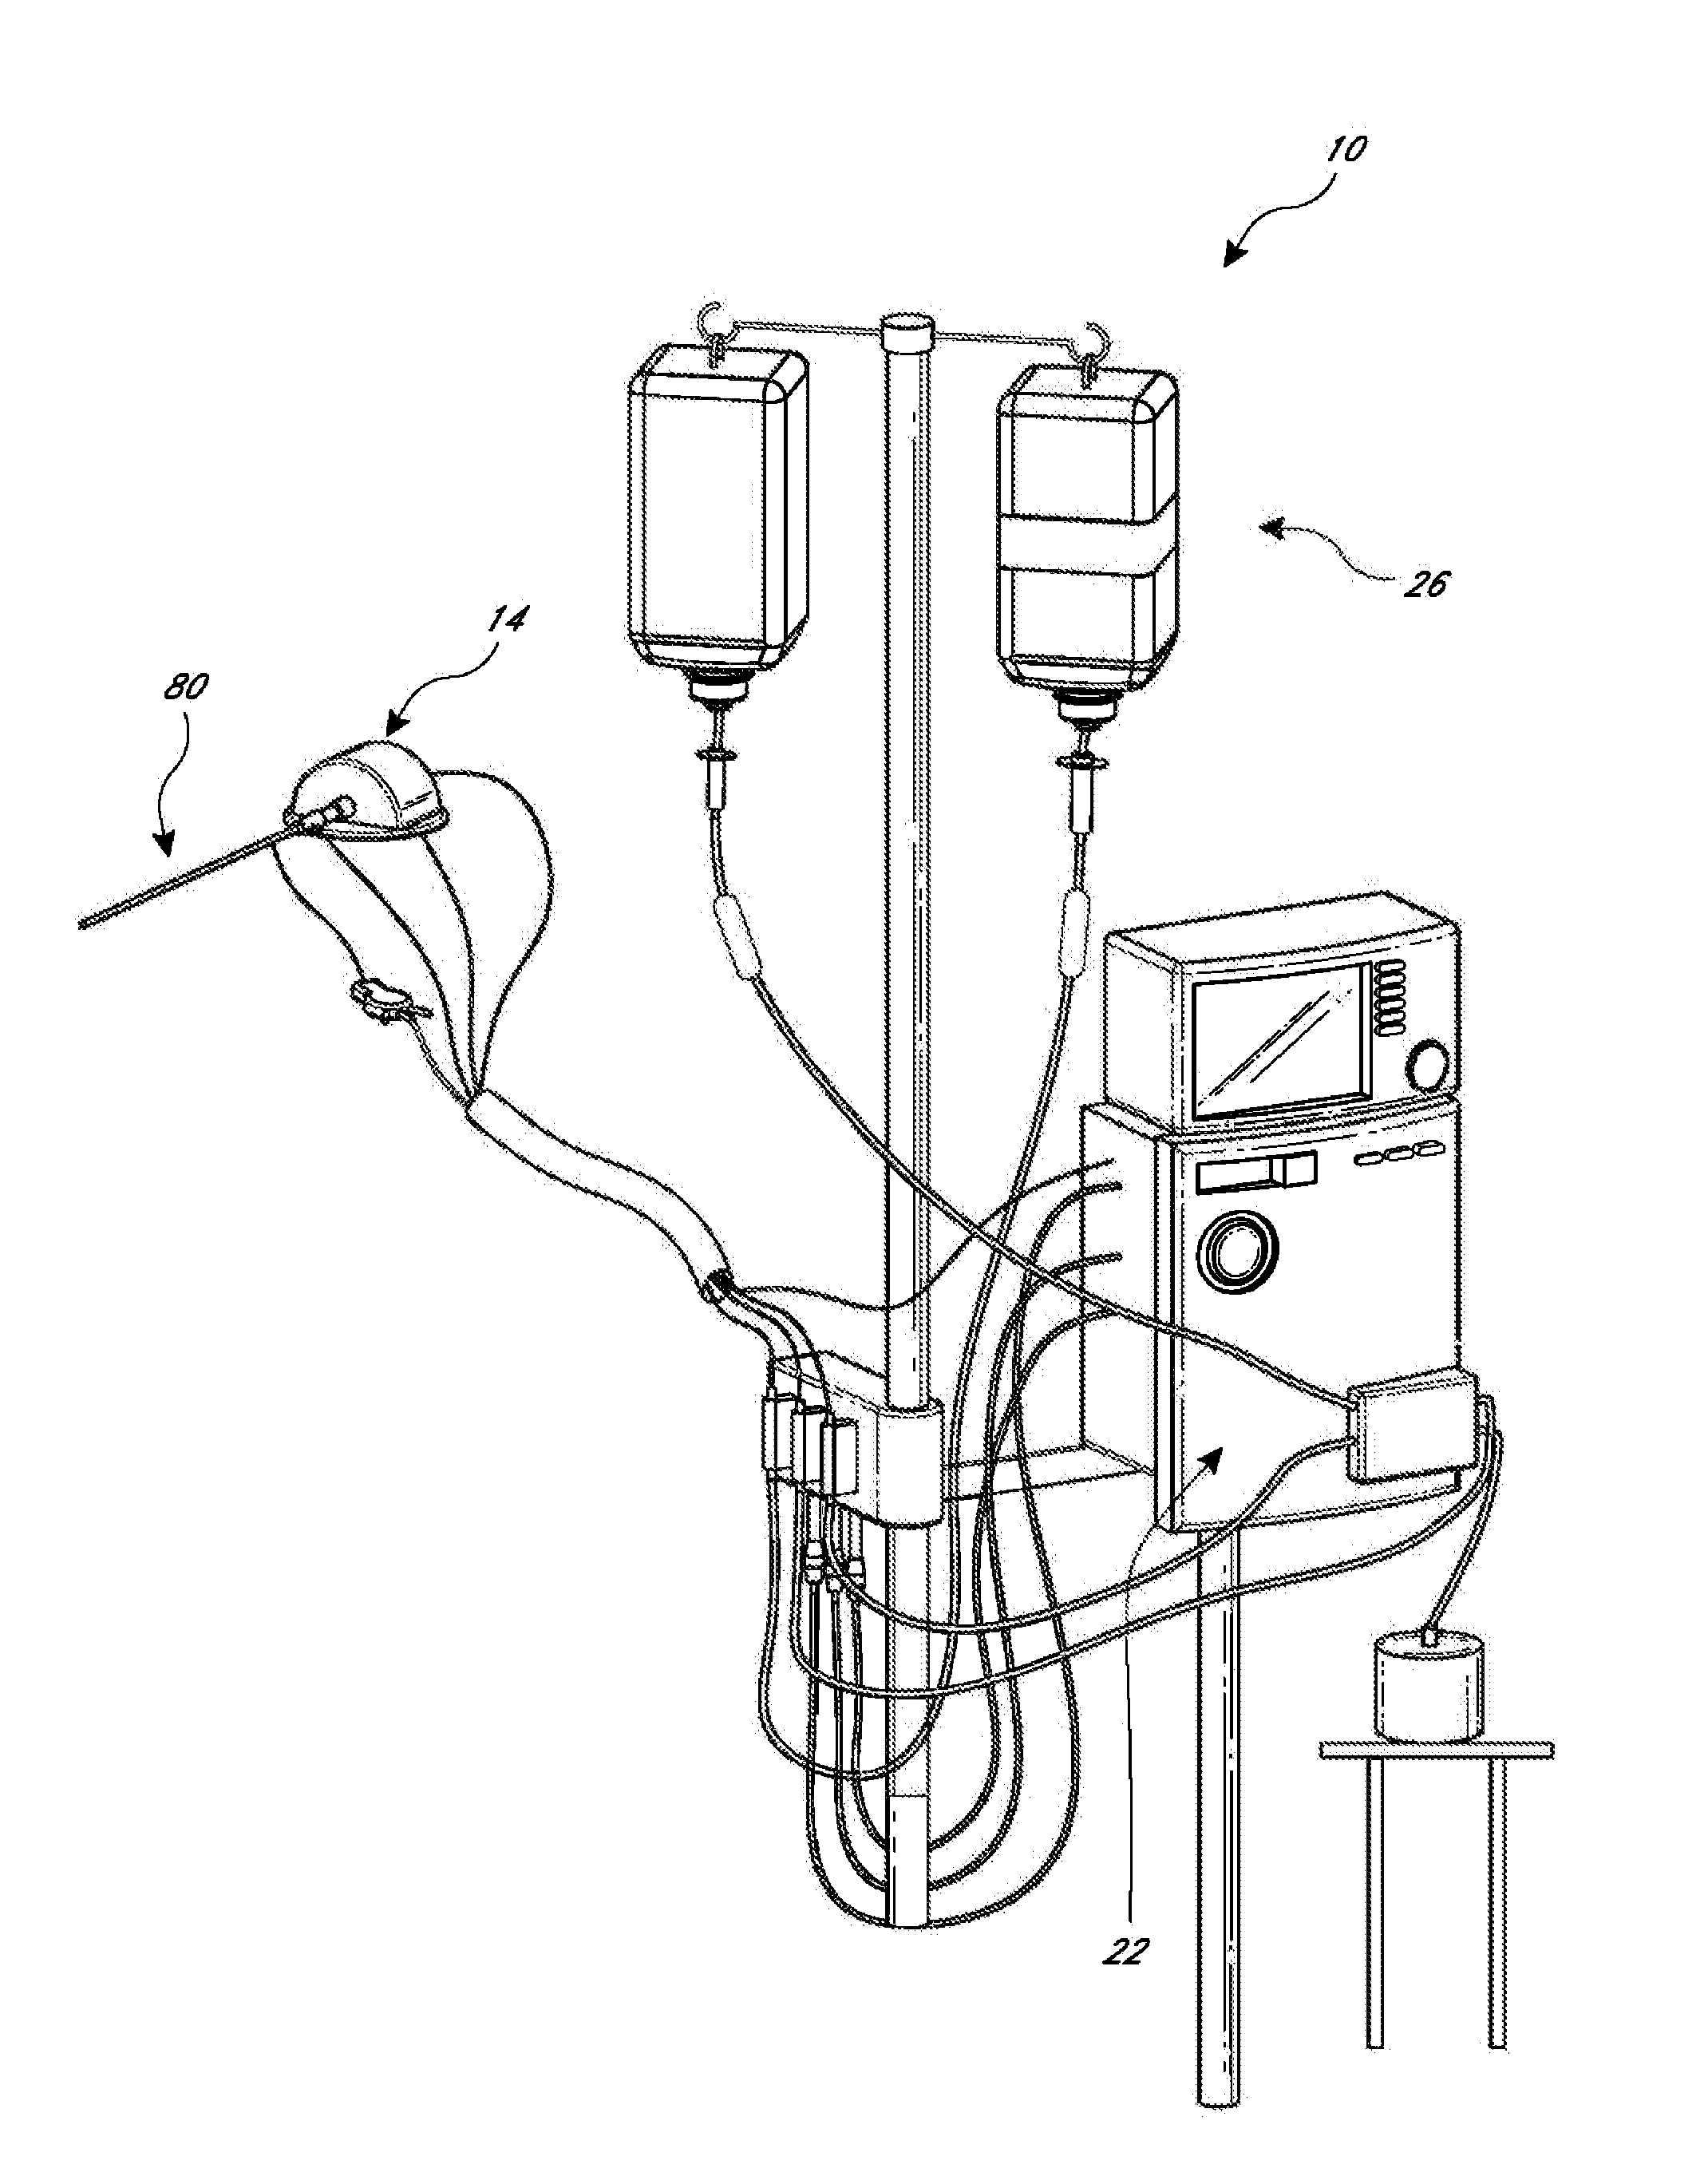 Motor assembly for catheter pump